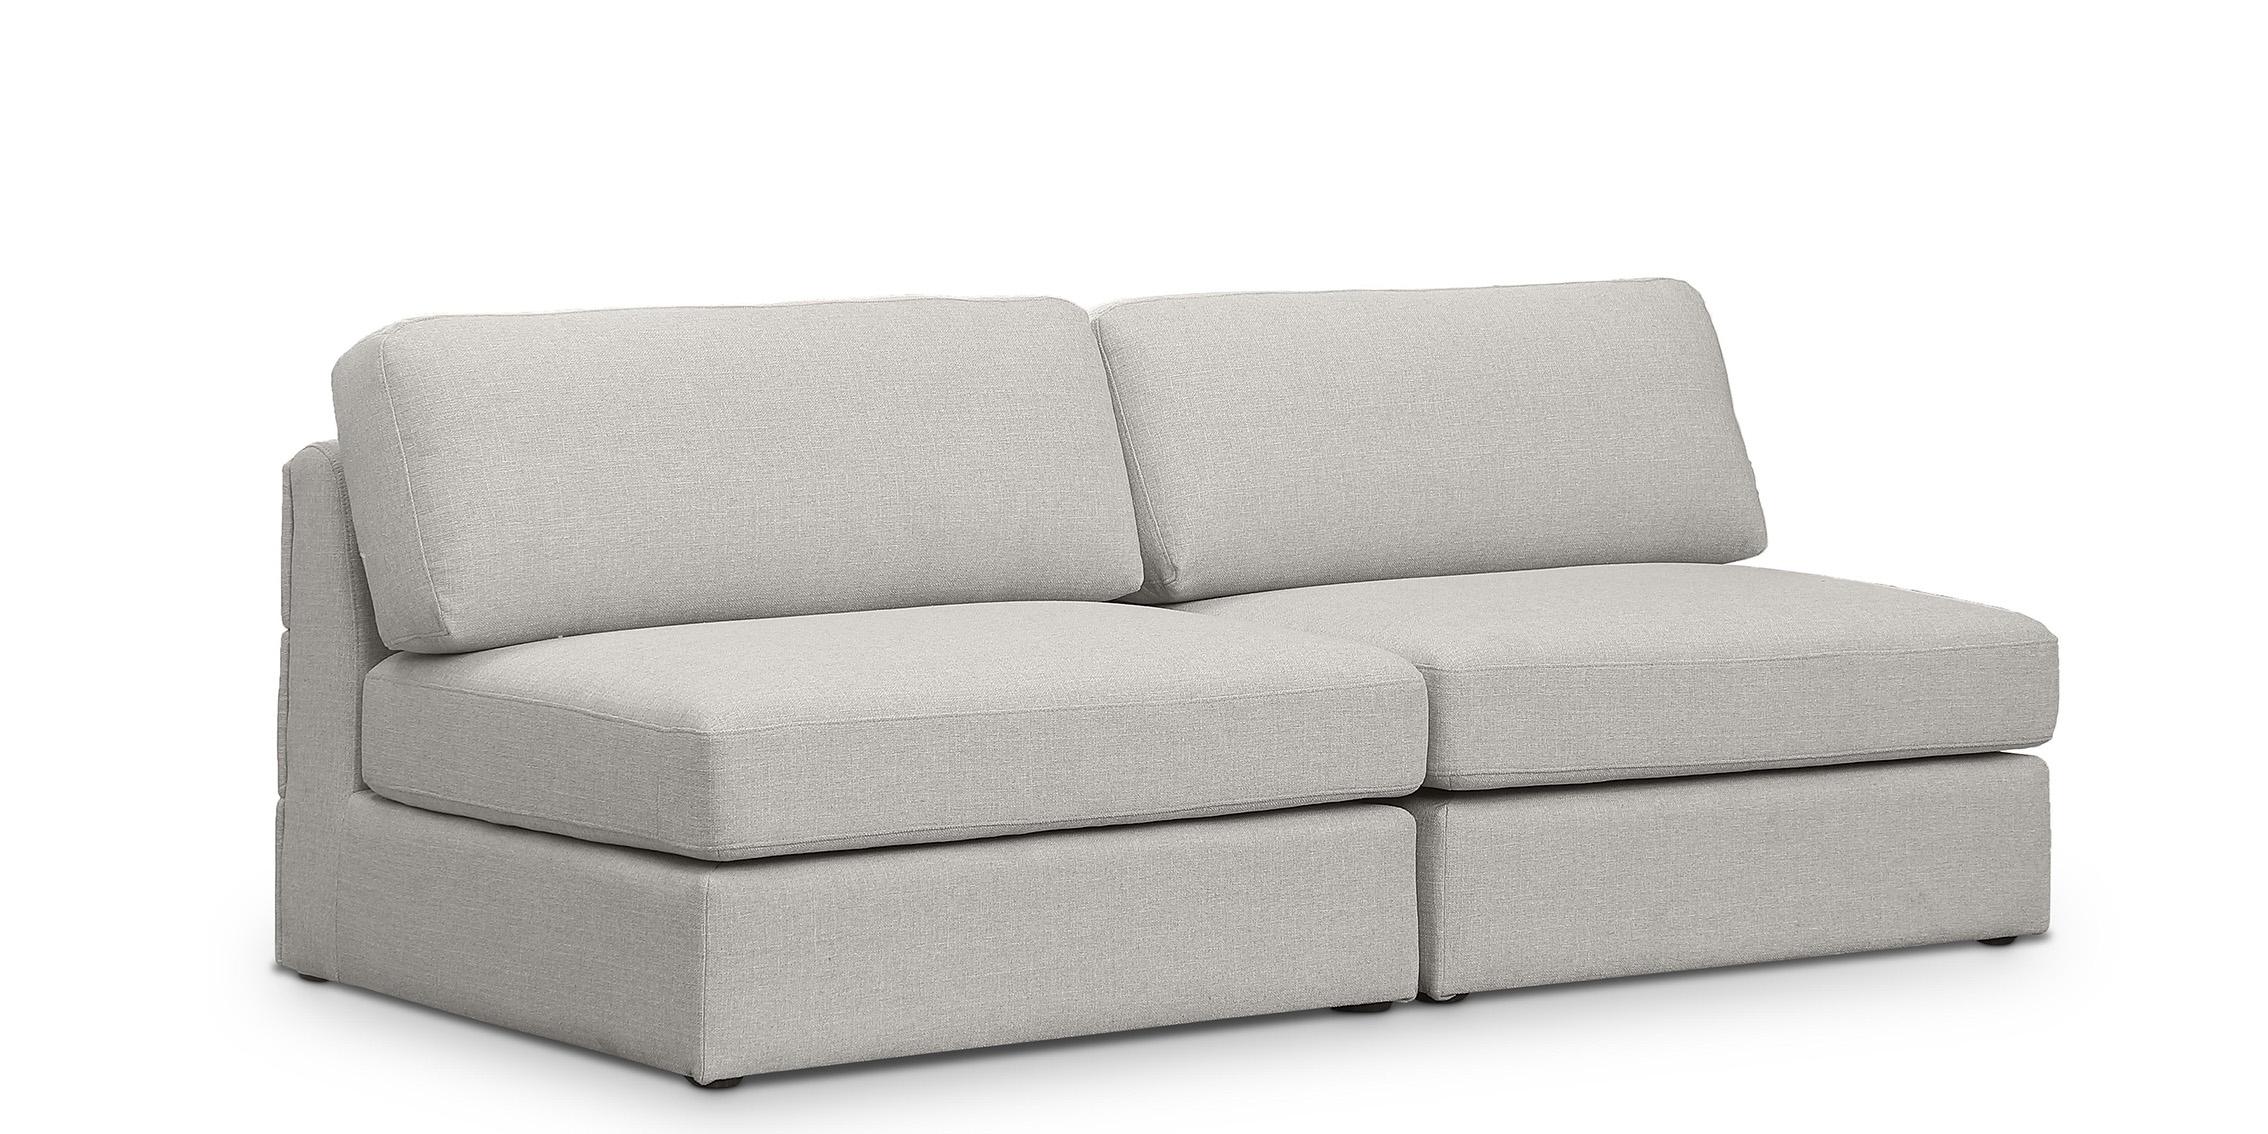 Contemporary, Modern Modular Sofa BECKHAM 681Beige-S76B 681Beige-S76B in Beige Linen